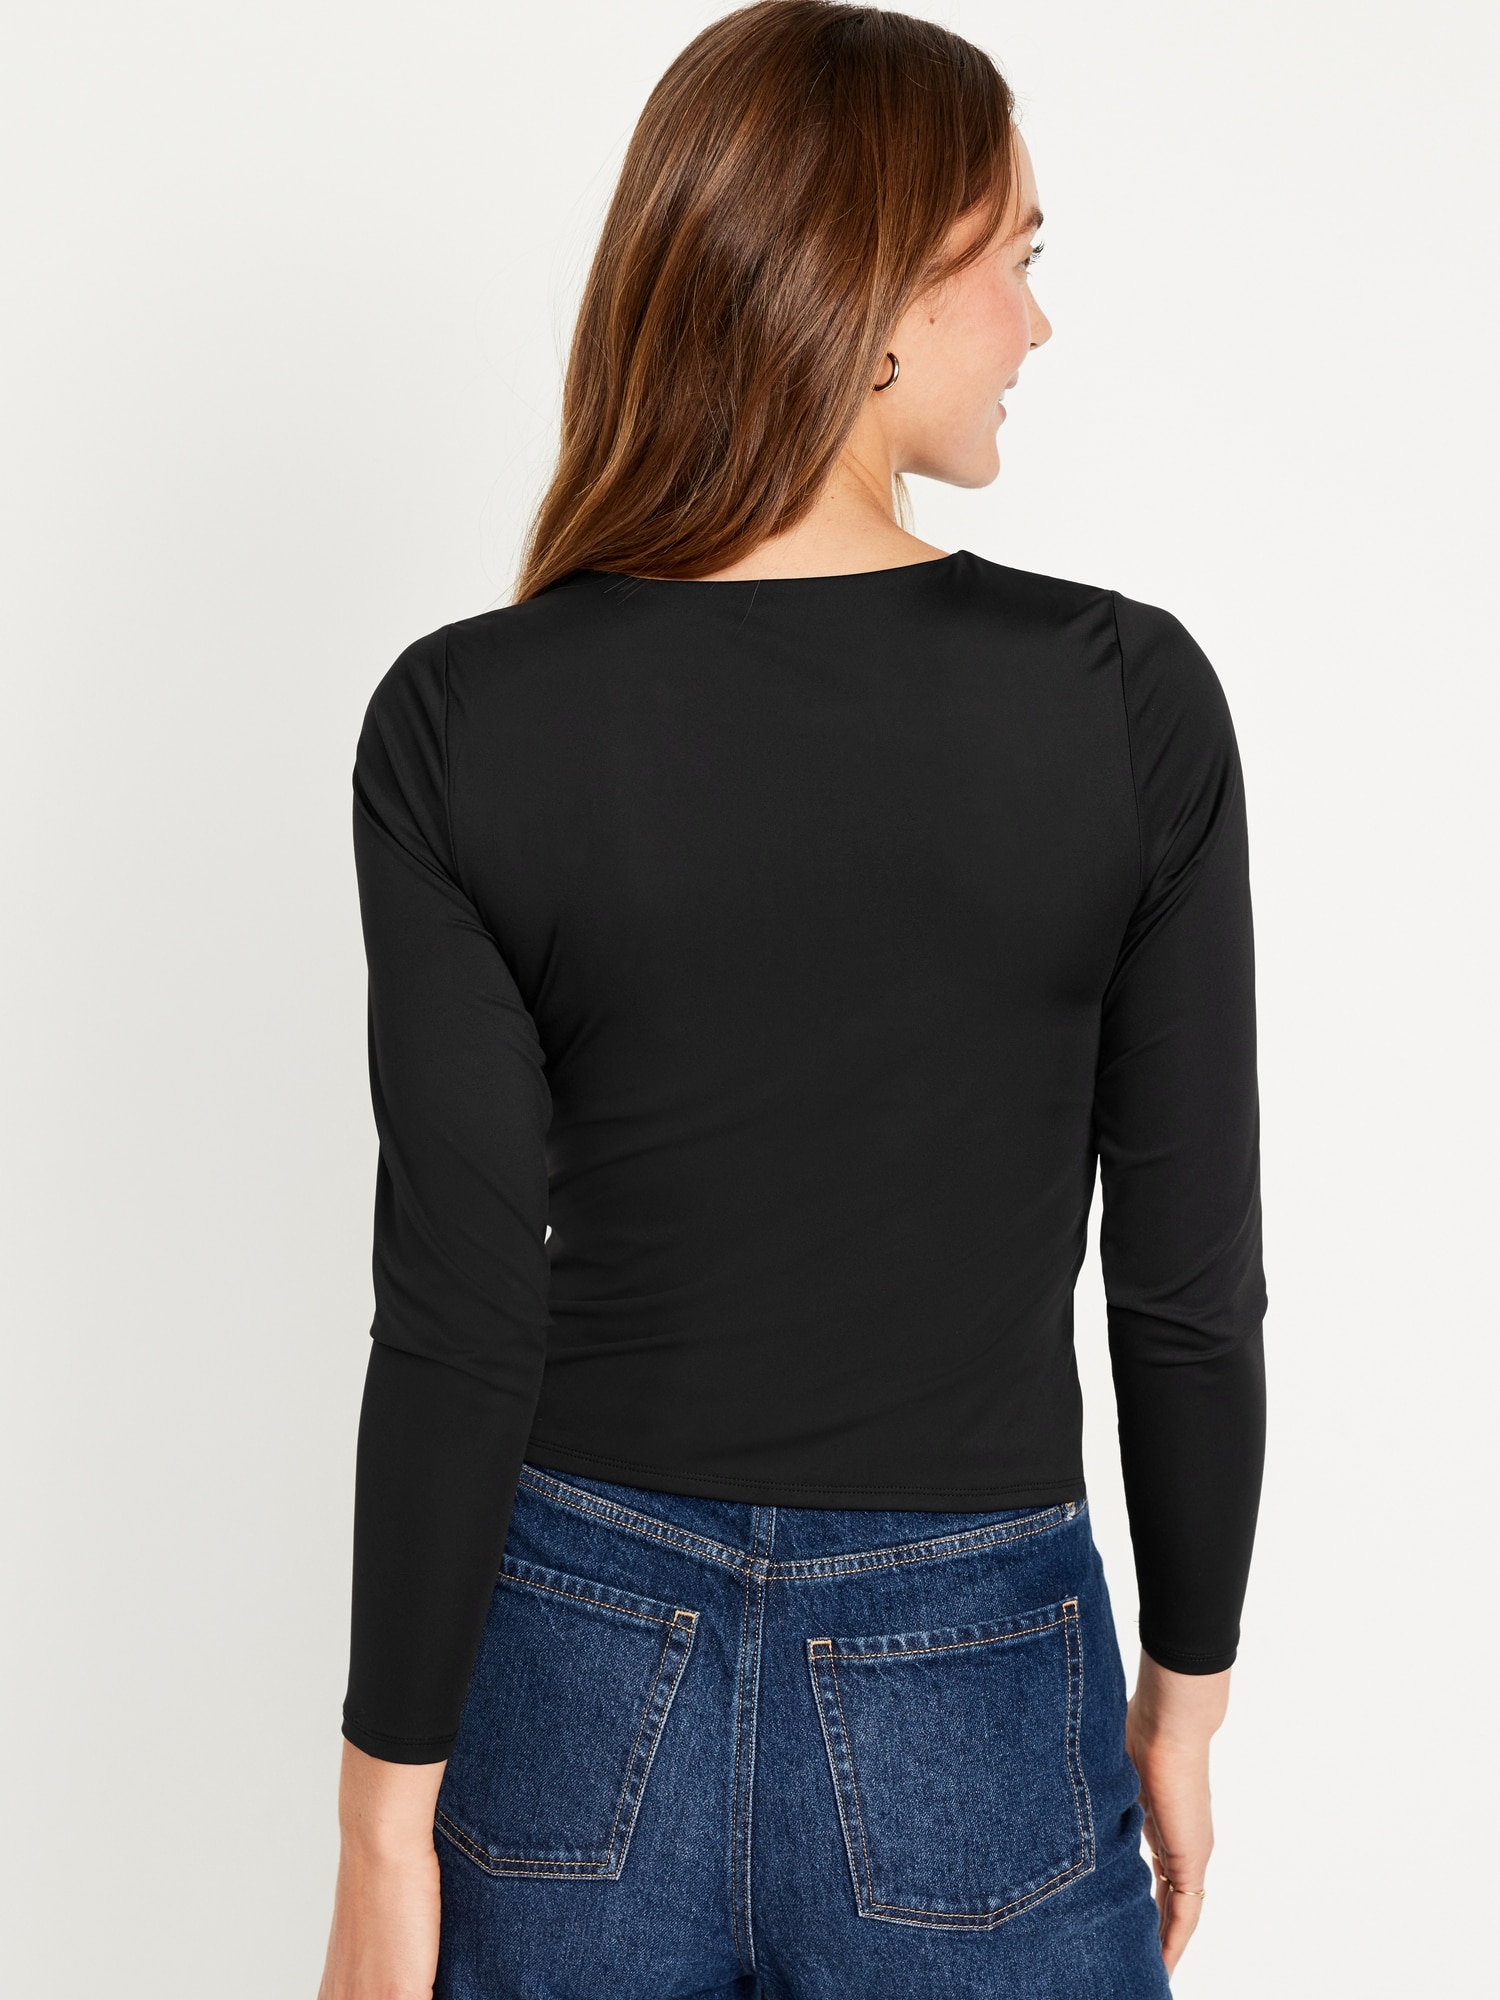 Women's Long Sleeve Sea Tee, Classic Fit T-shirt